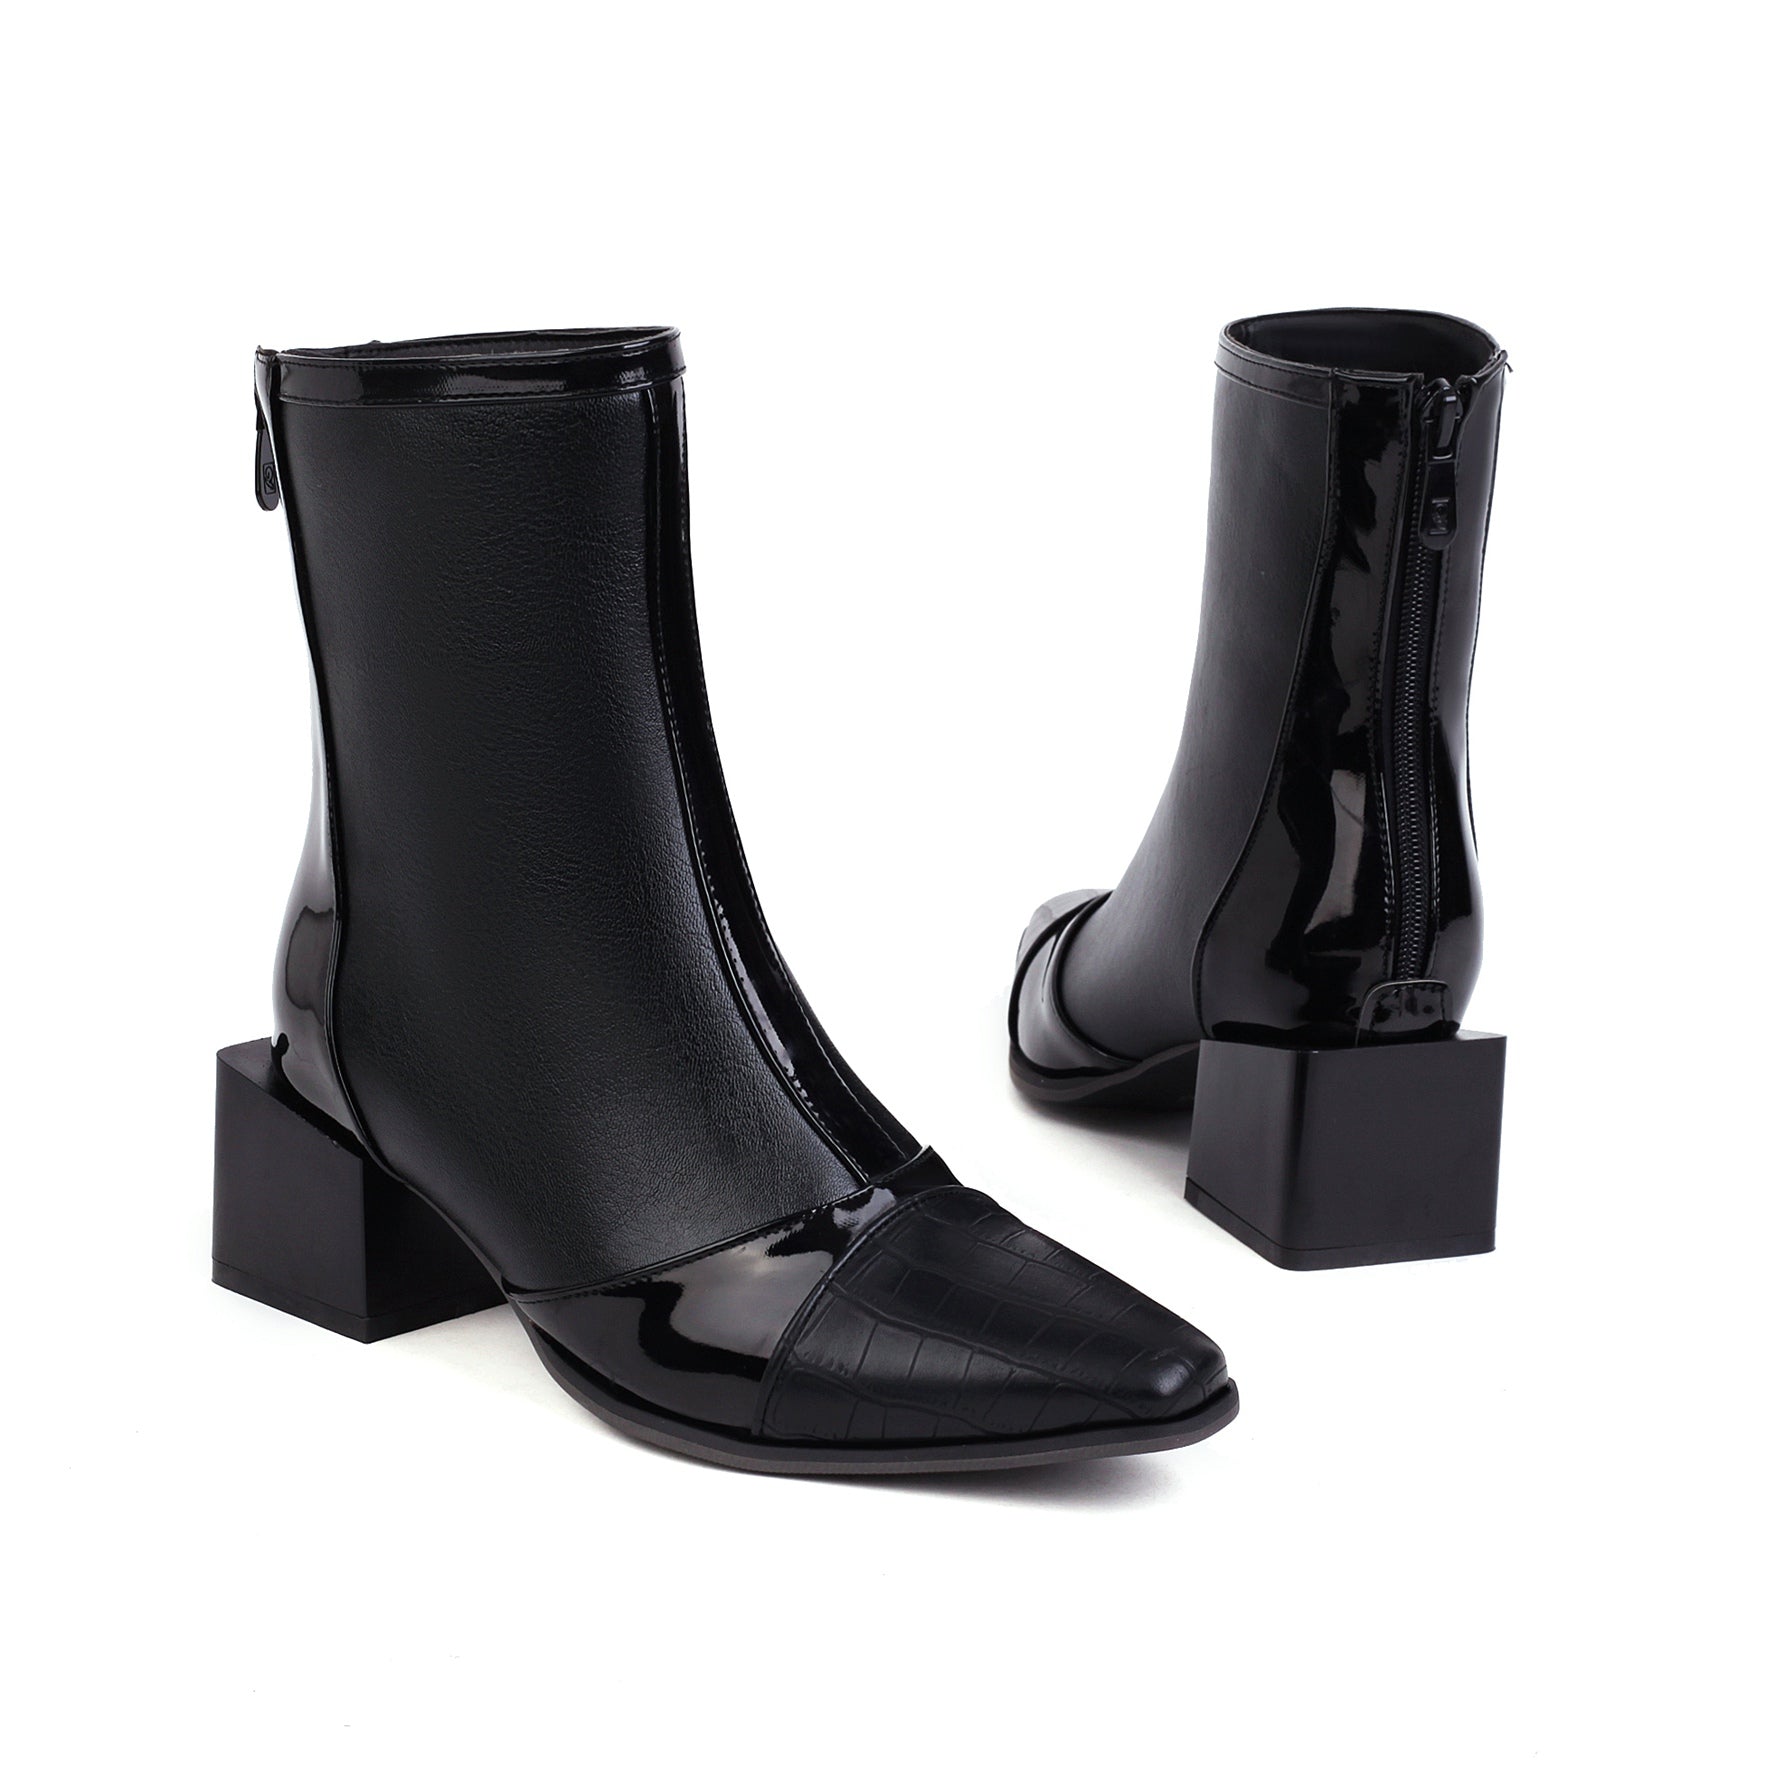 Bigsizeheels Stylish Side Zipper Pointed Toe Chunky Heel Ankle Boots - Black freeshipping - bigsizeheel®-size5-size15 -All Plus Sizes Available!